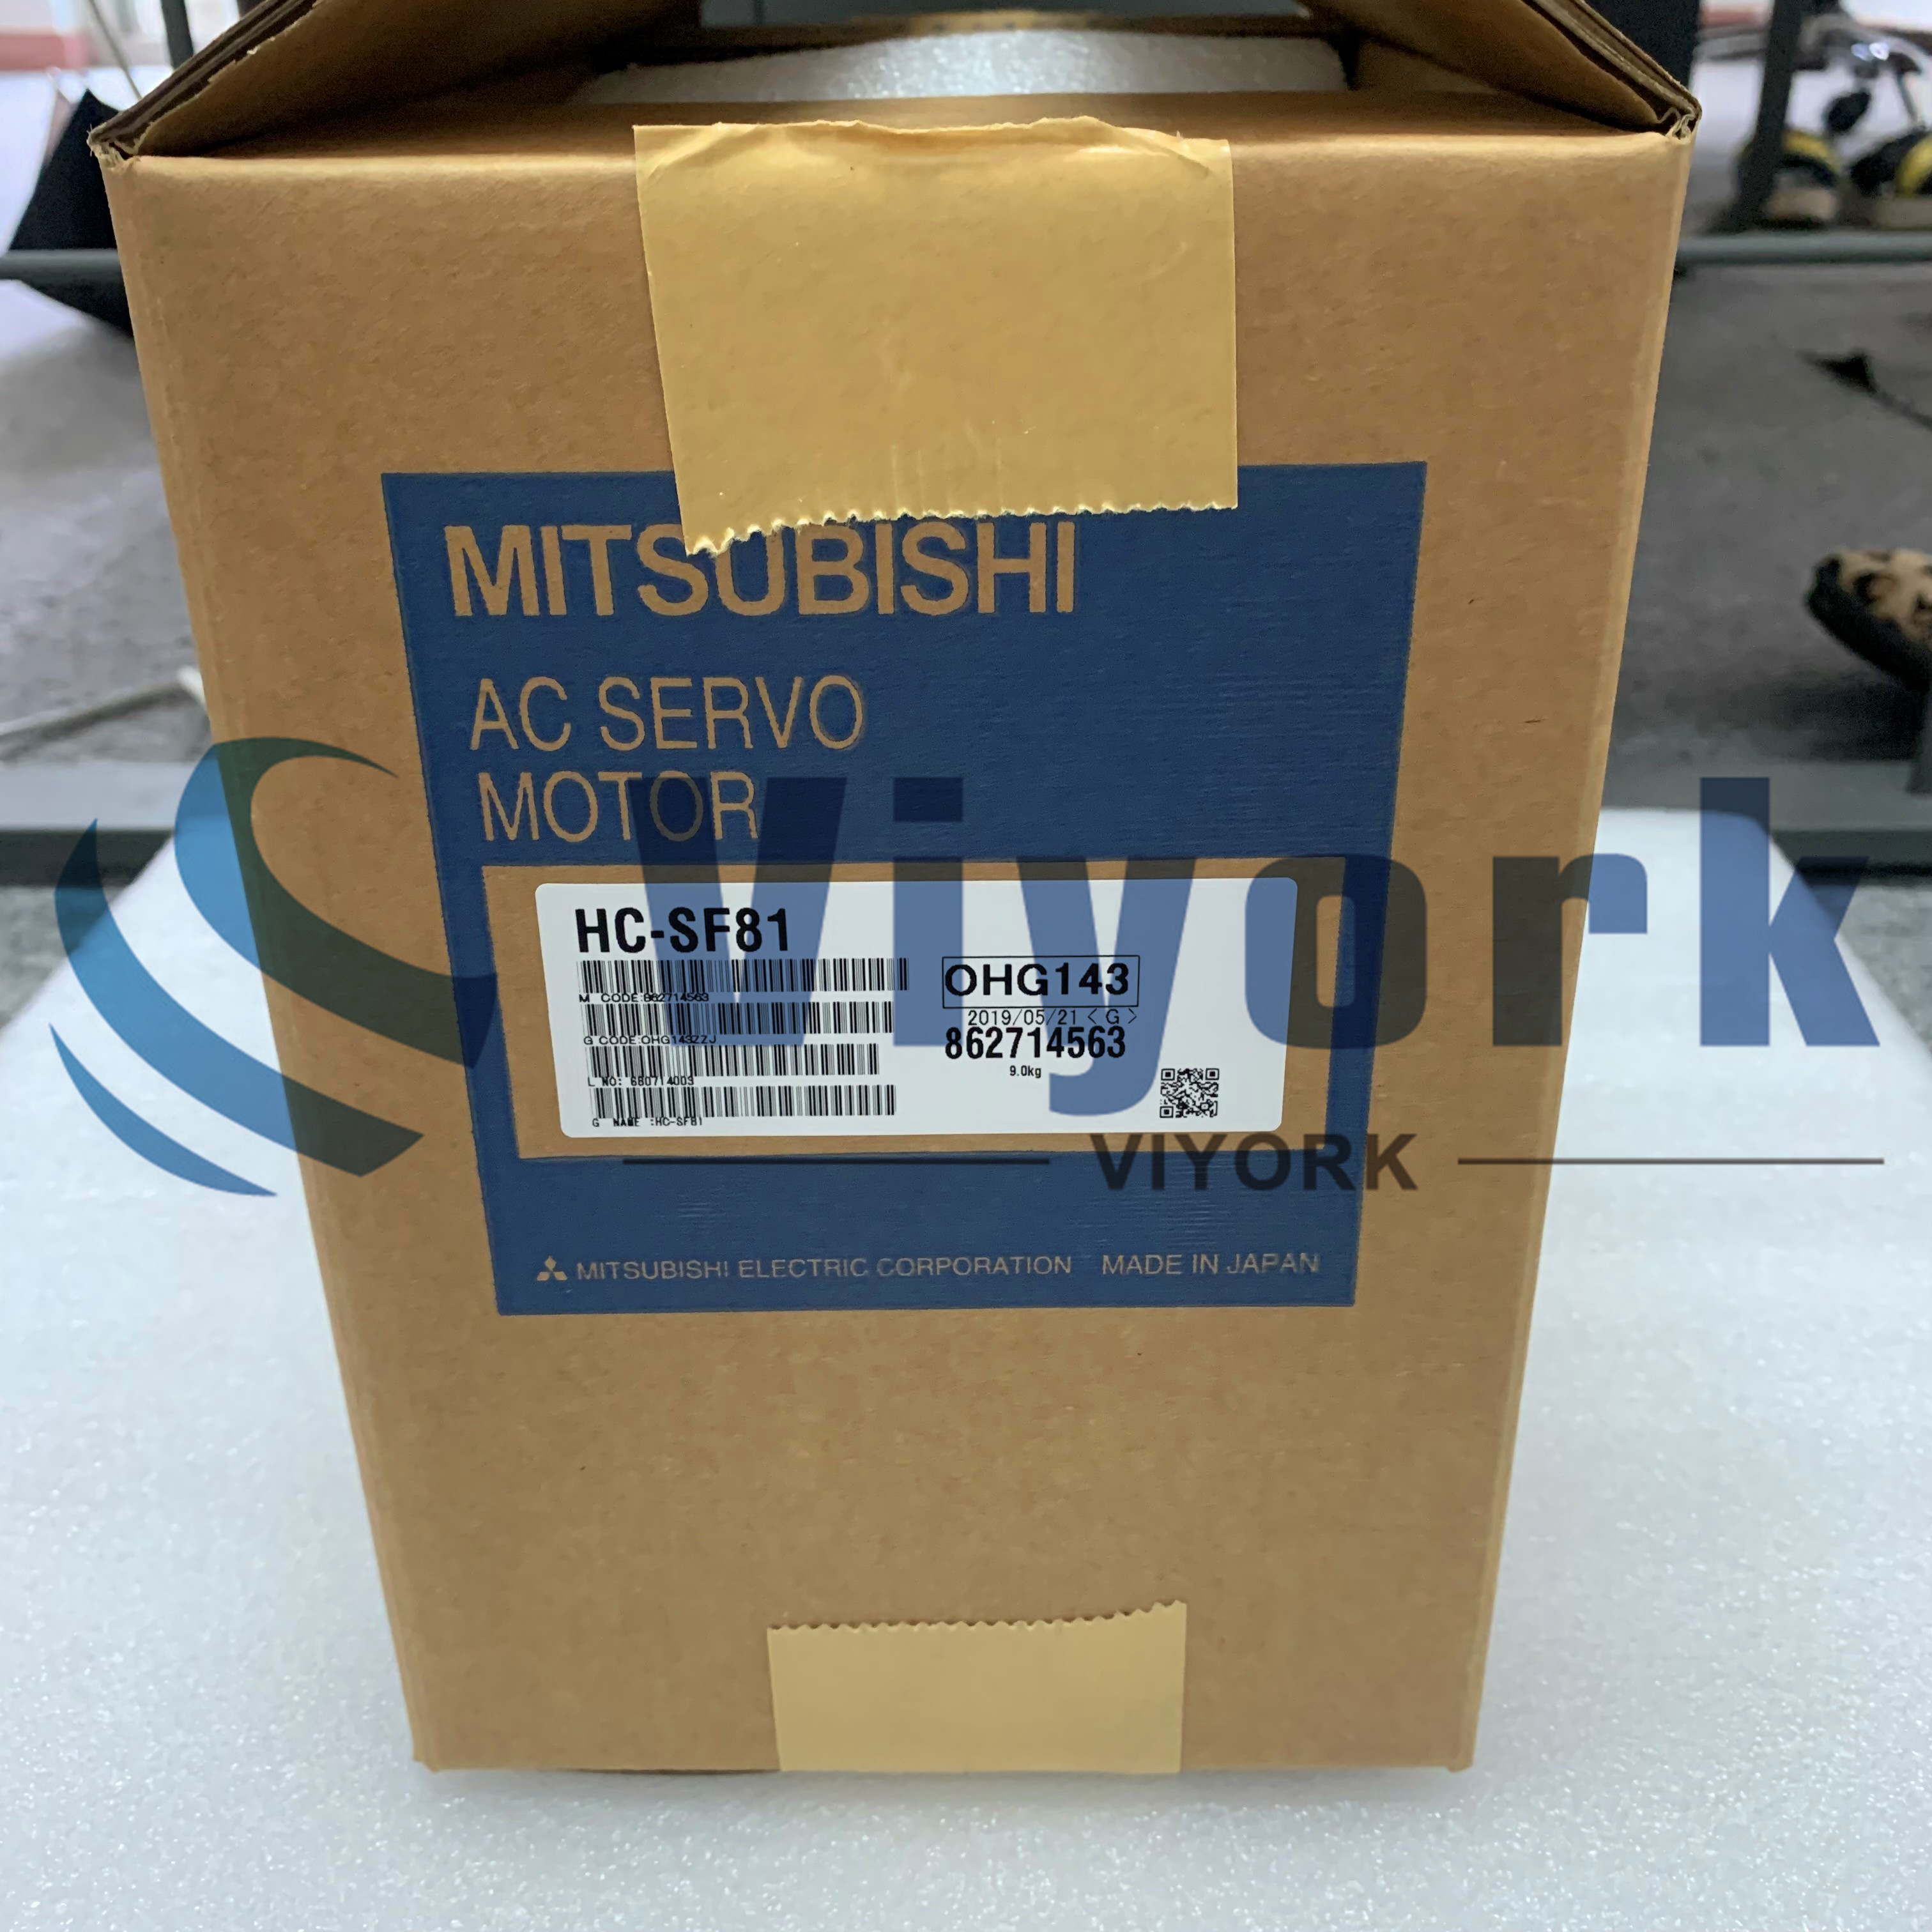 Mitsubishi HC-SF81 AC SERVO MOTOR 850W 127V 5.1A 3000RPM NEW